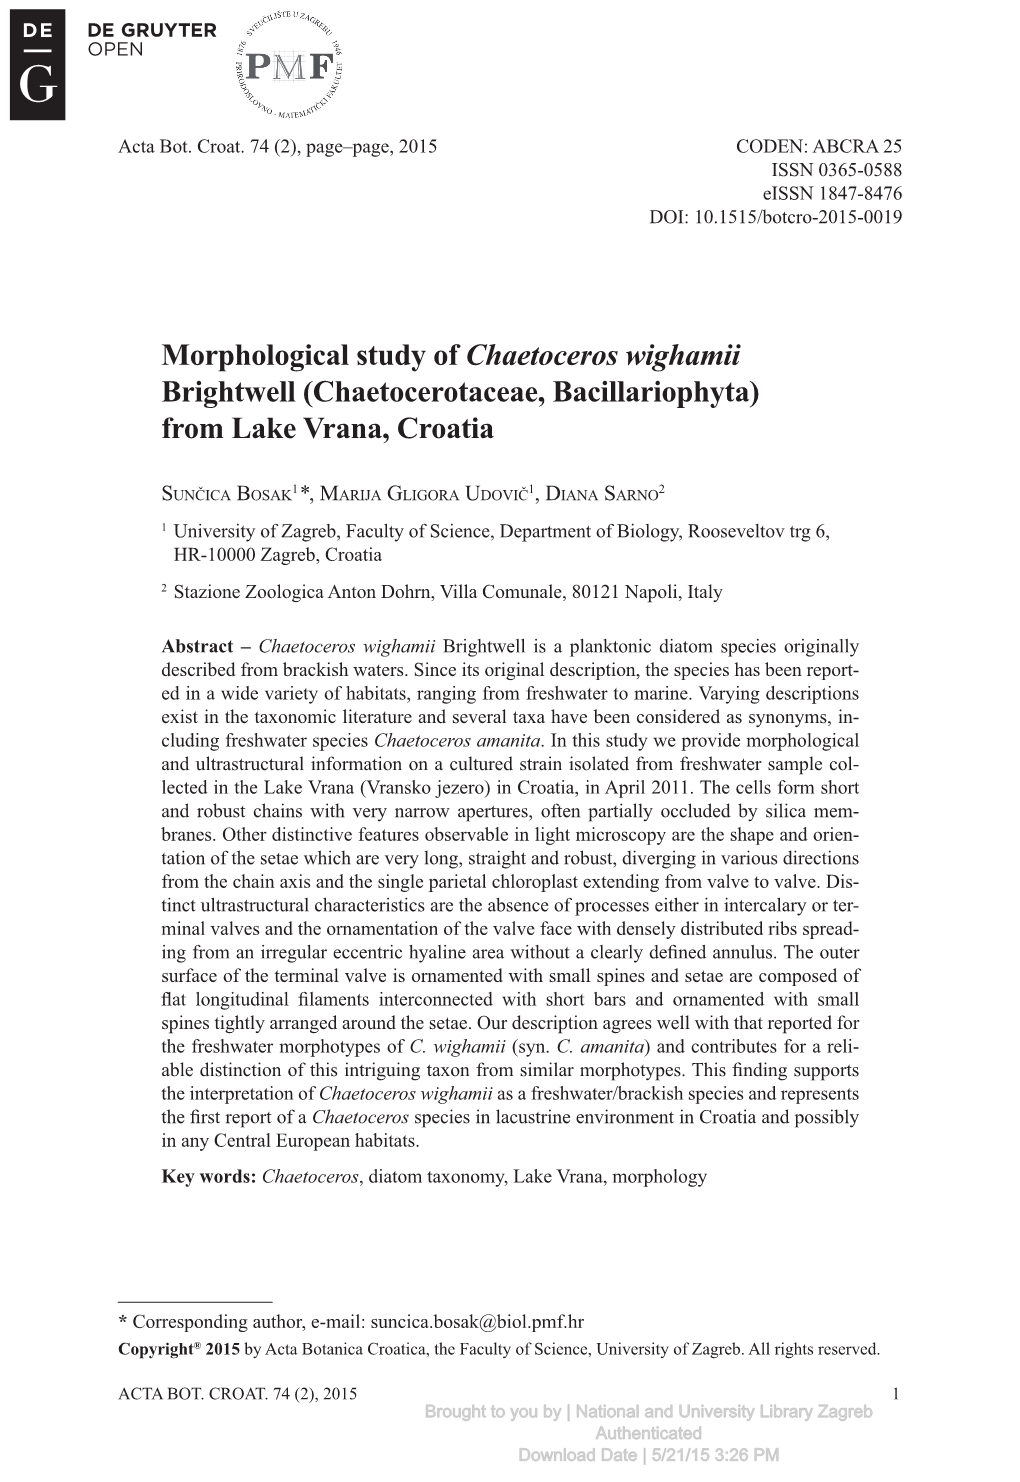 Morphological Study of Chaetoceros Wighamii Brightwell (Chaetocerotaceae, Bacillariophyta) from Lake Vrana, Croatia